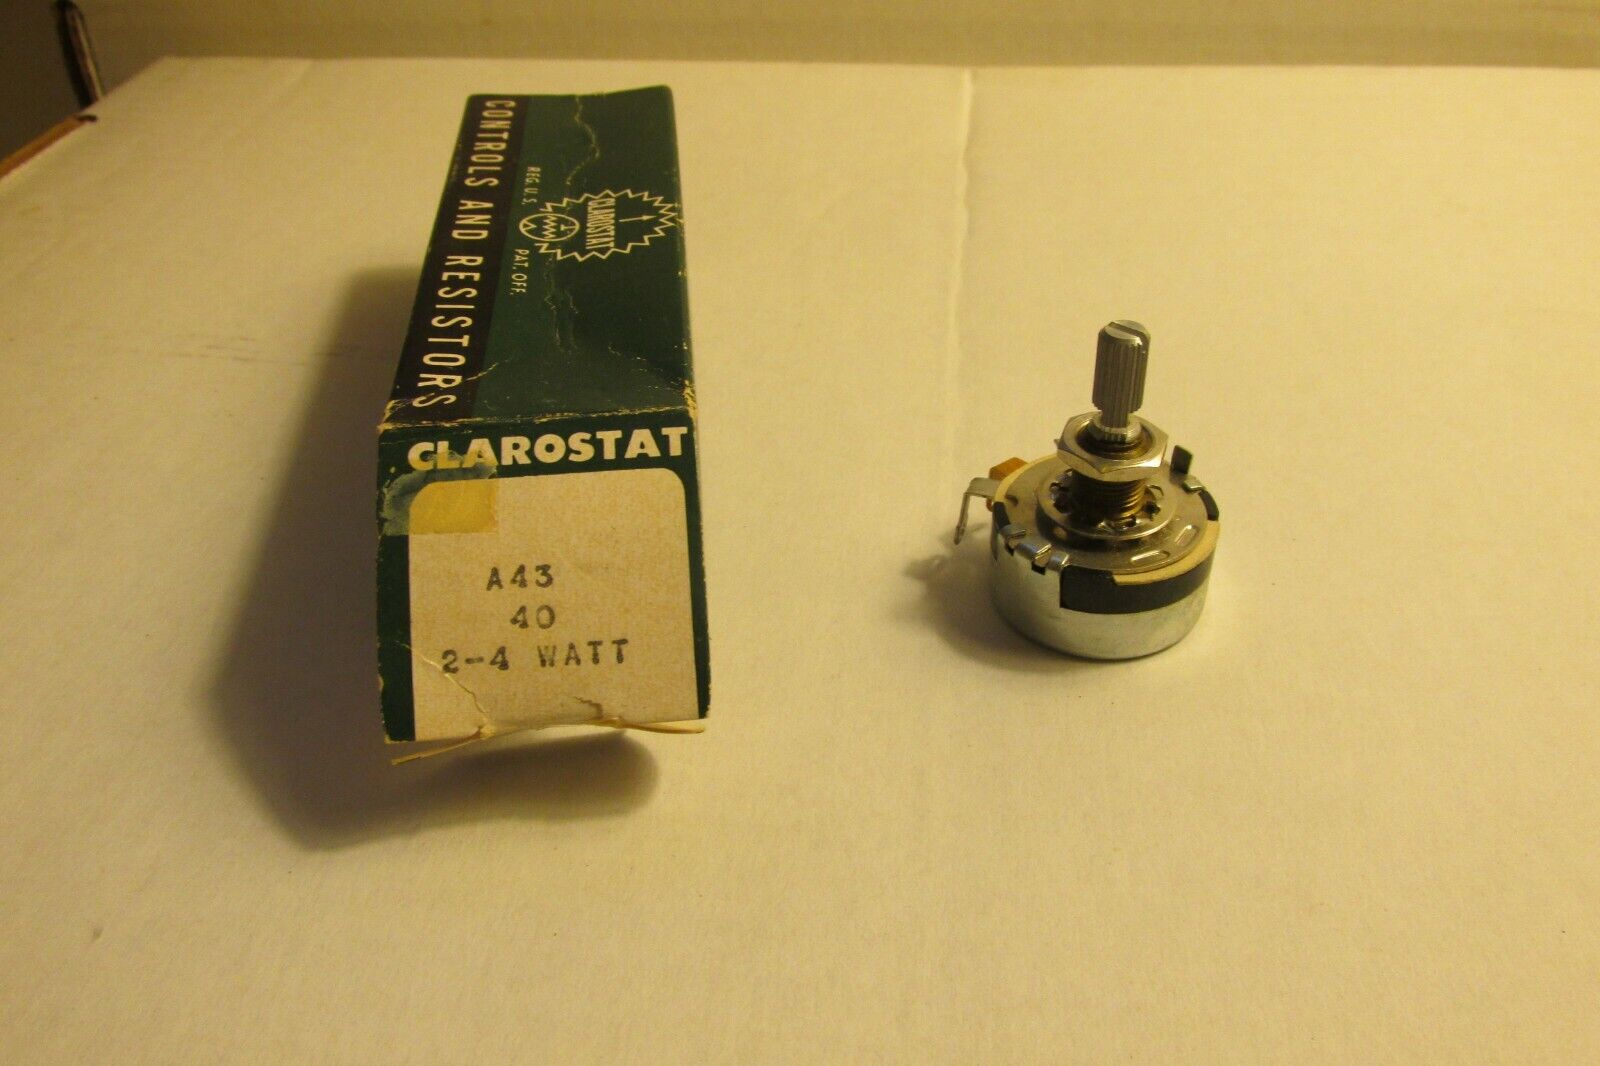 CLAROSTAT A43 40 2-4 Watt made in USA 